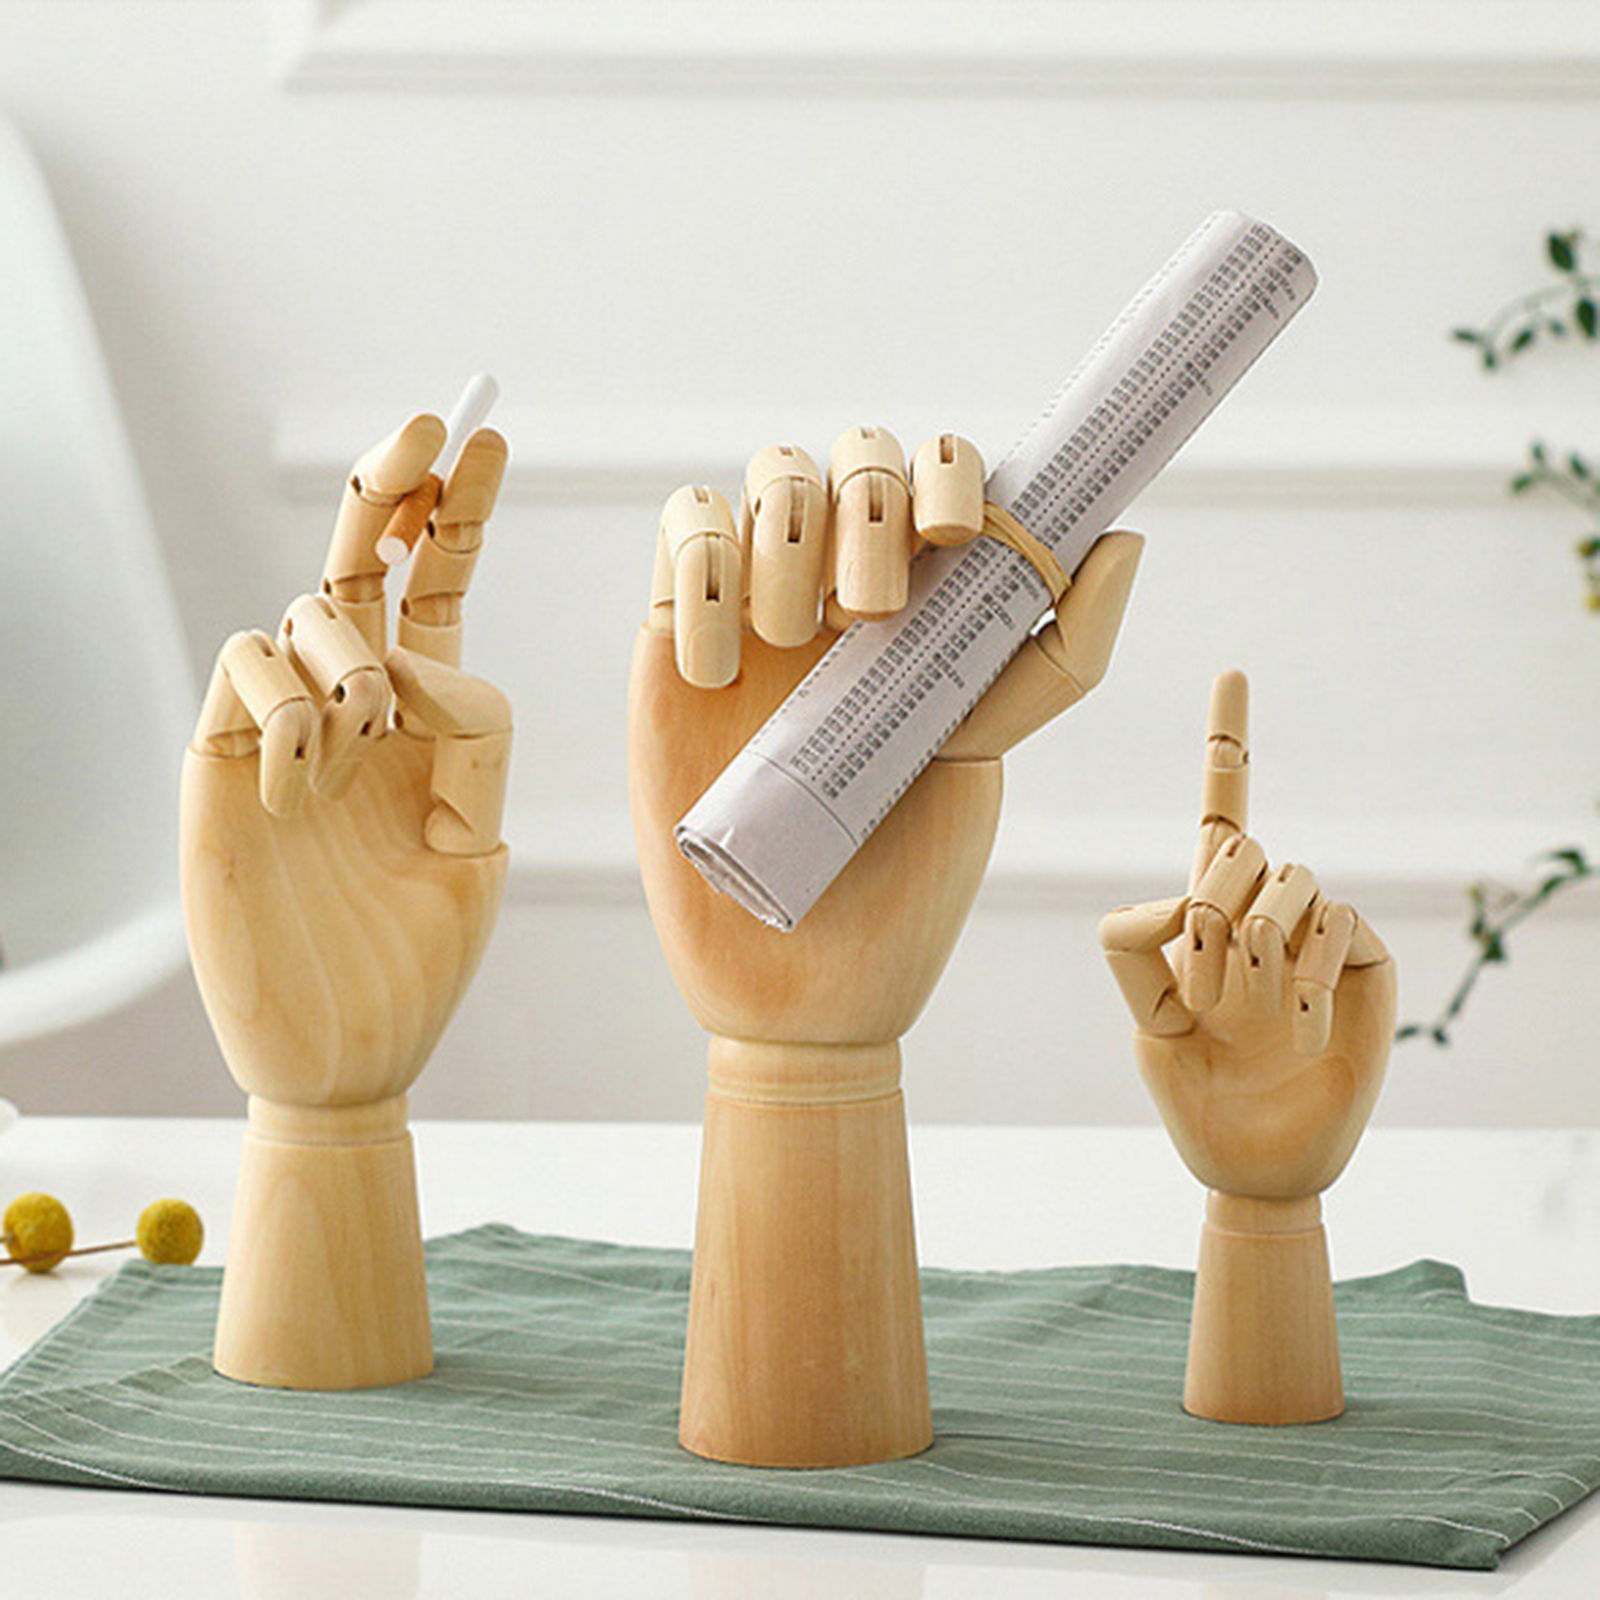 Nuolin Mini Creative Wooden Art Model Decoration Wooden Doll Joint Hand